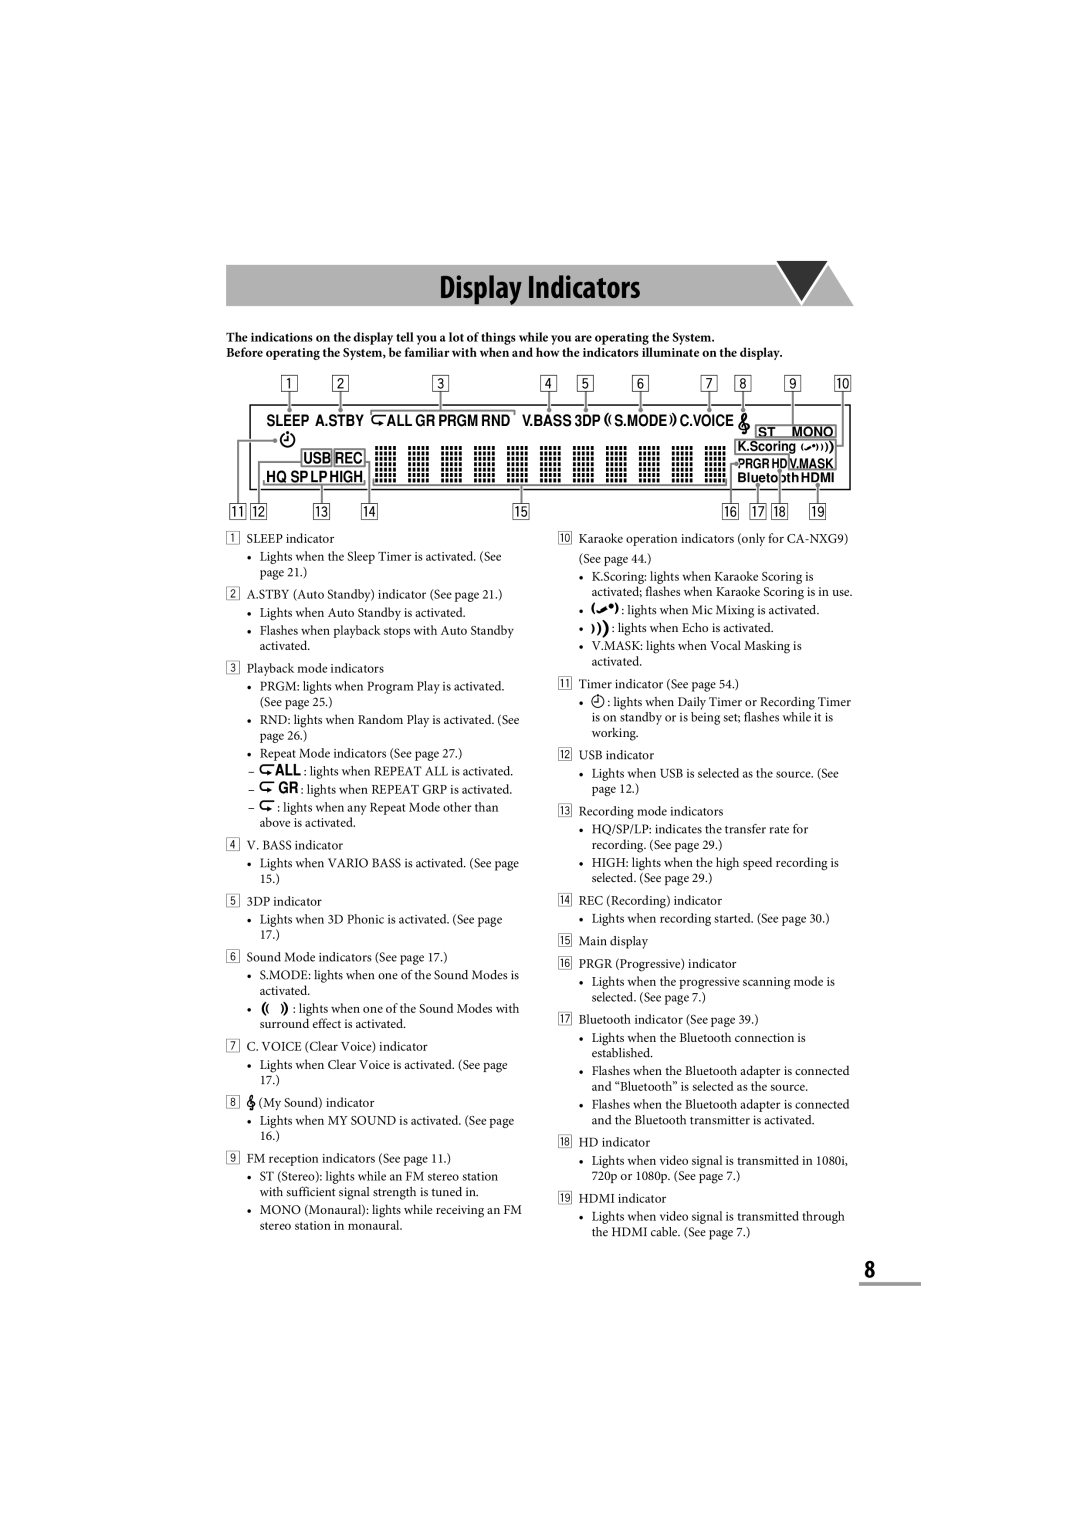 JVC CA-NXG9 manual Display Indicators, Usbrec Hq Sp Lp High, S.Mode, C.Voice, Sleep A.Stby All Gr Prgm Rnd, V.BASS 3DP 